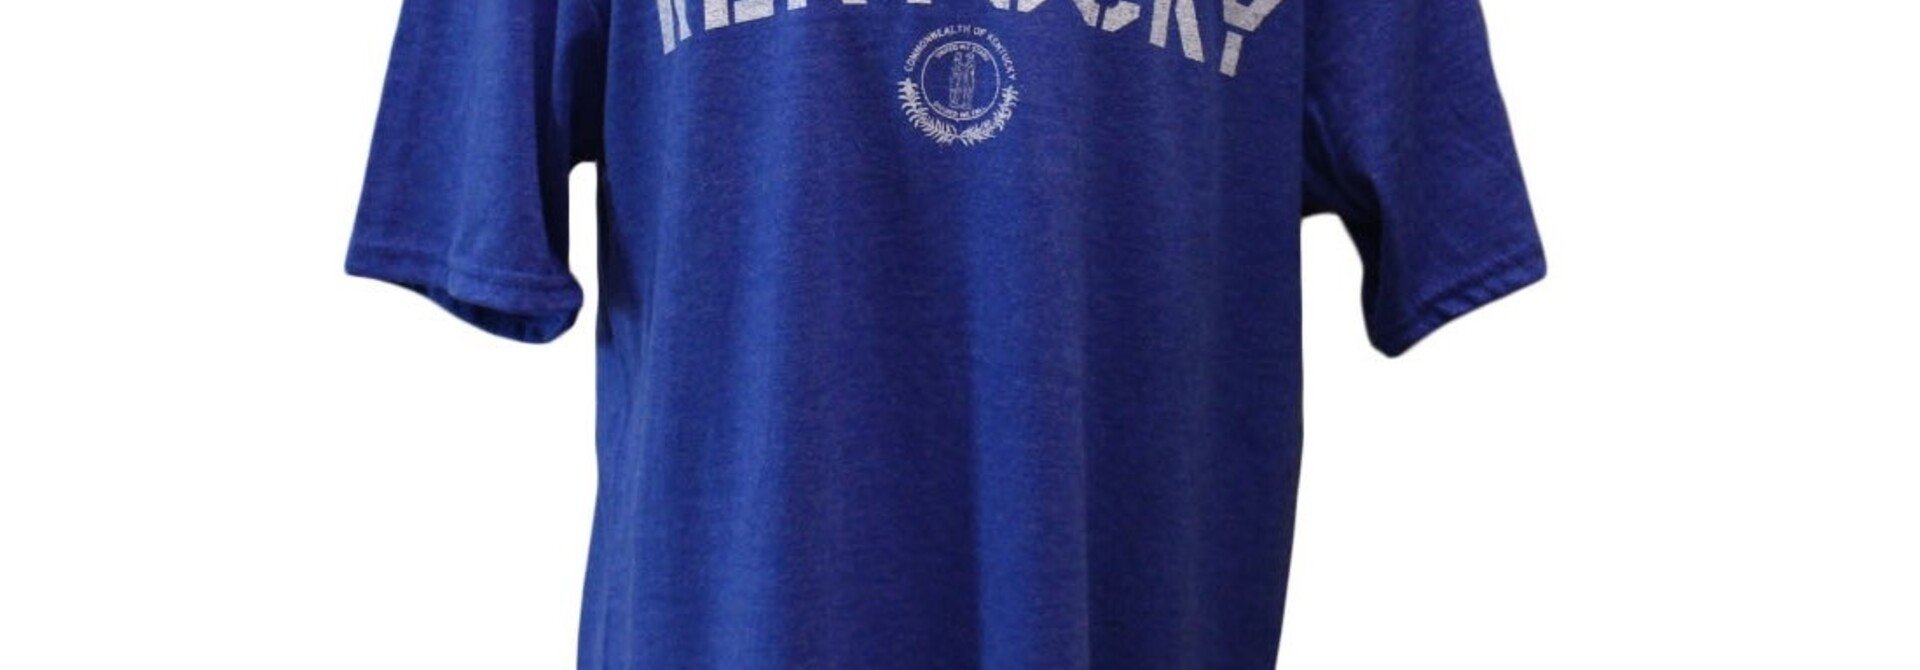 Berea Kentucky Commonwealth T-shirt